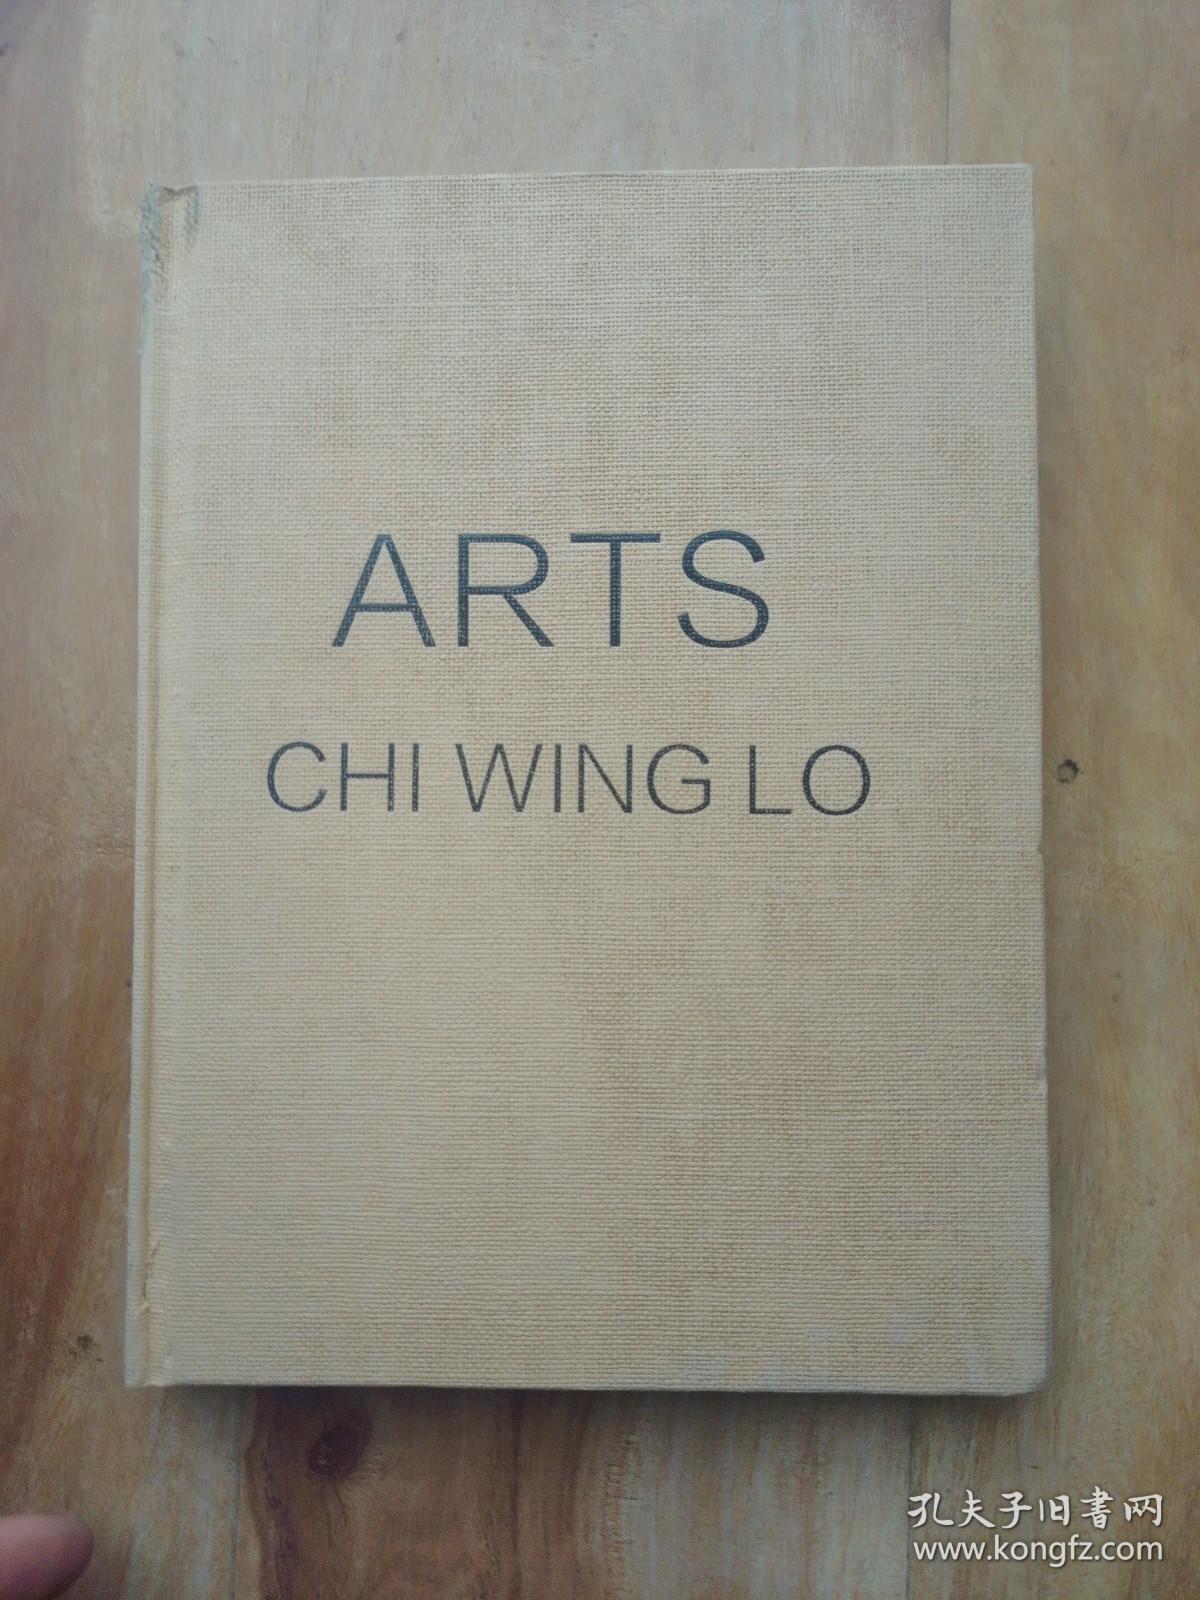 ARTS CHI WINGLO